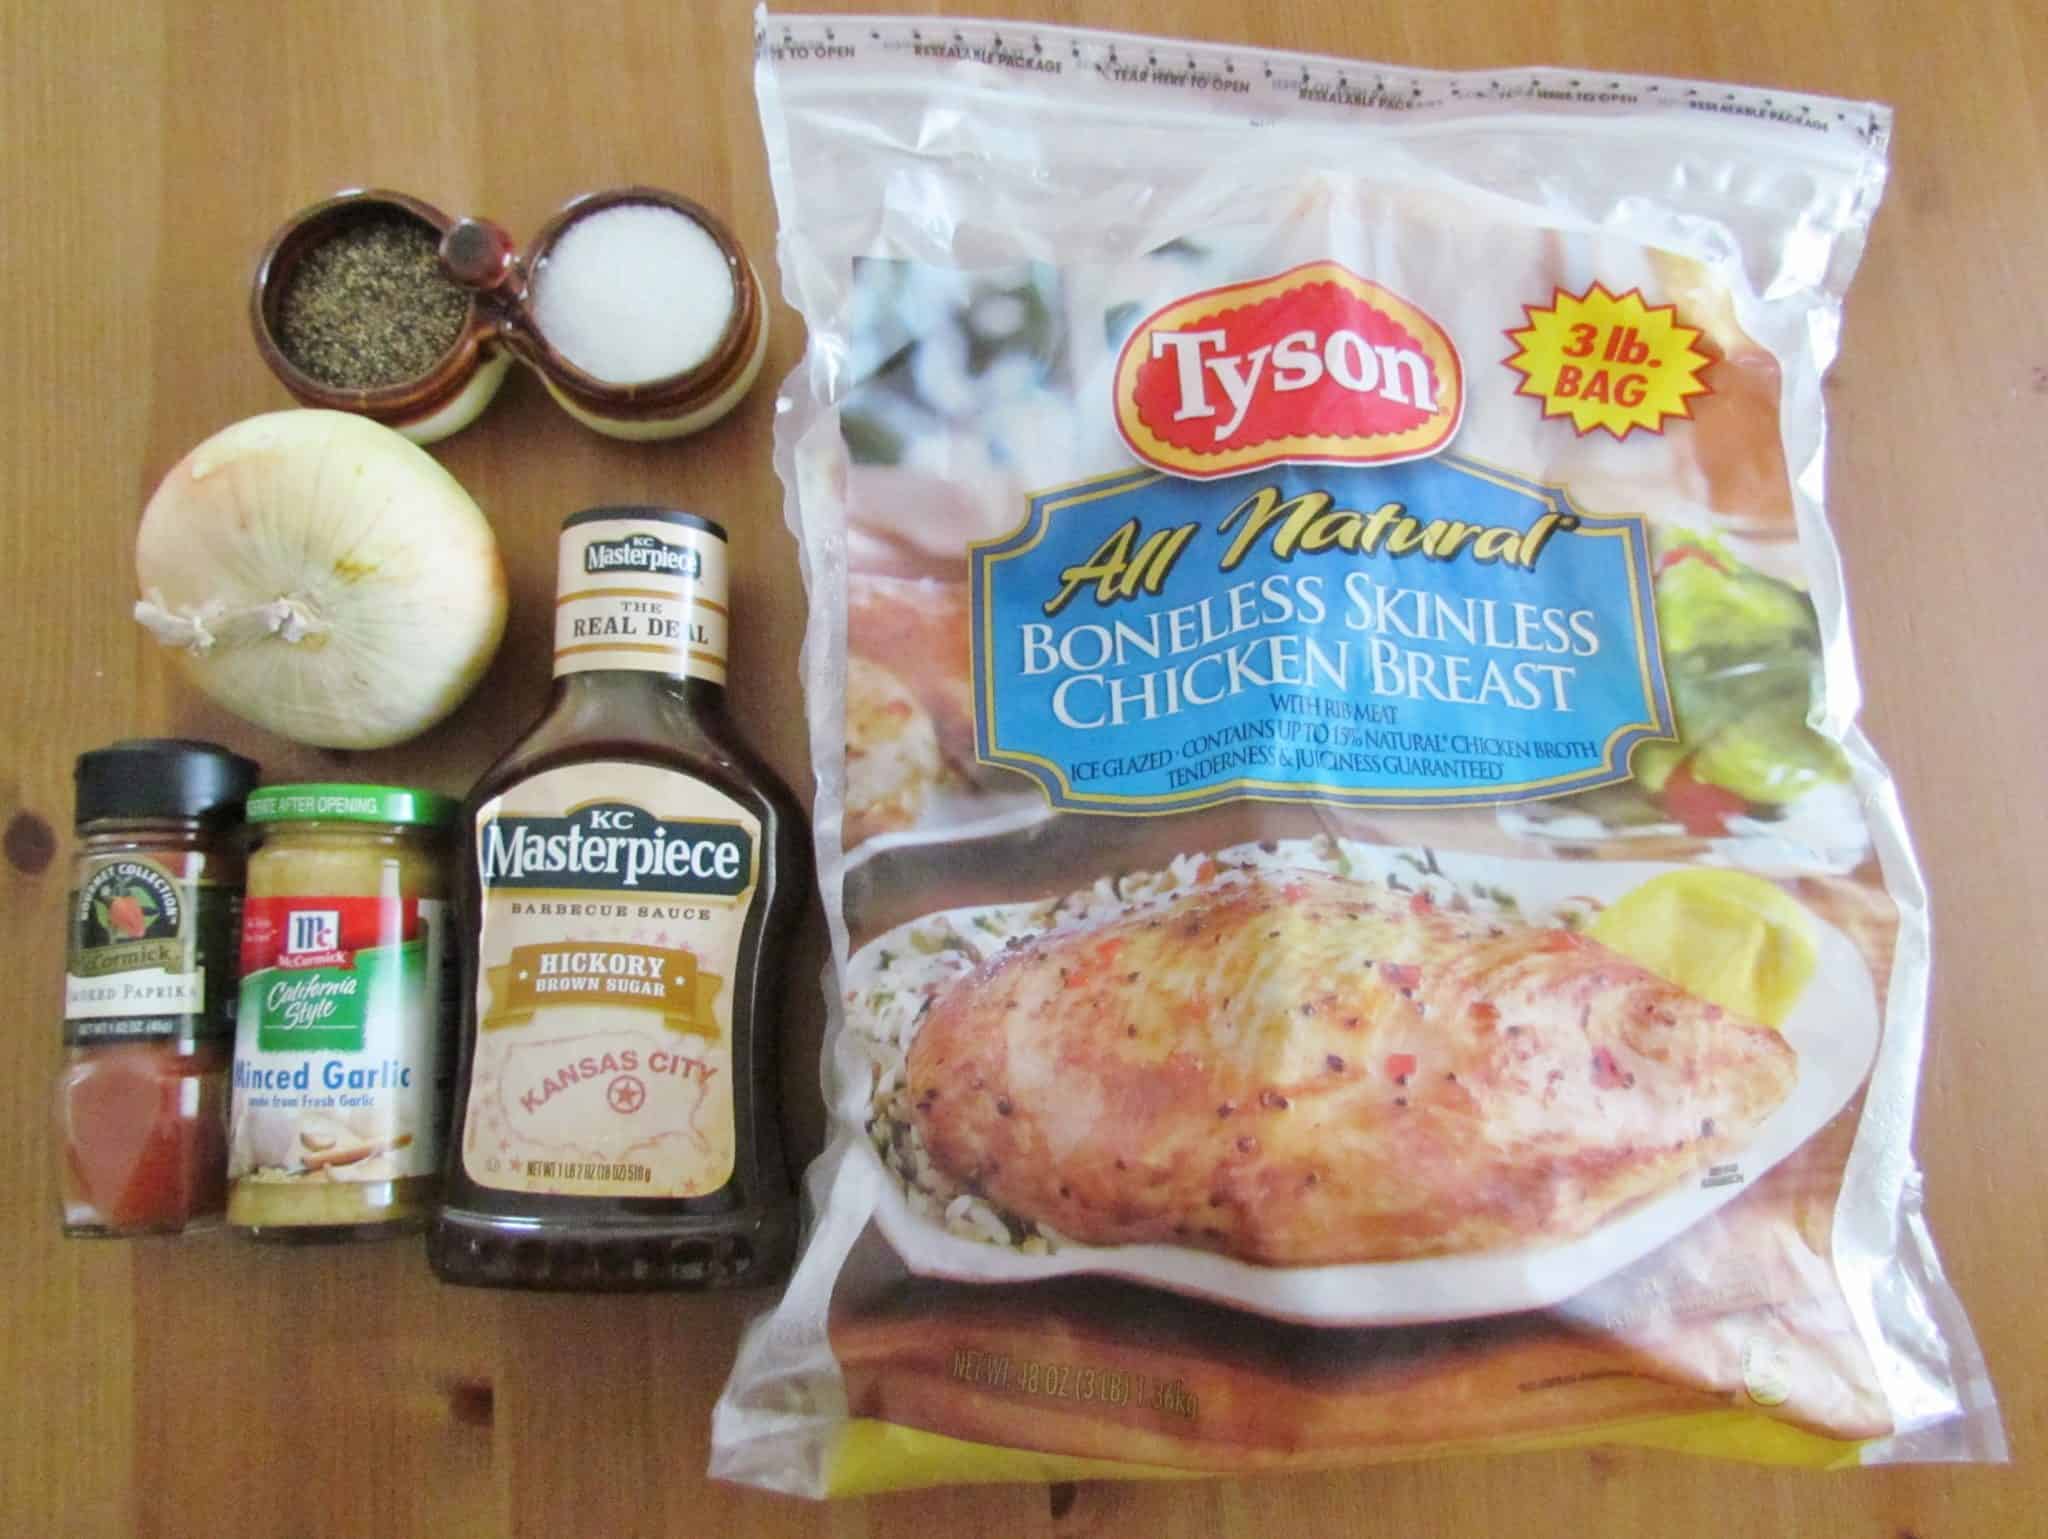 Crock Pot Shredded BBQ Chicken ingredients shown: bag of frozen chicken breasts, onion, garlic, smoked paprika, salt and pepper.